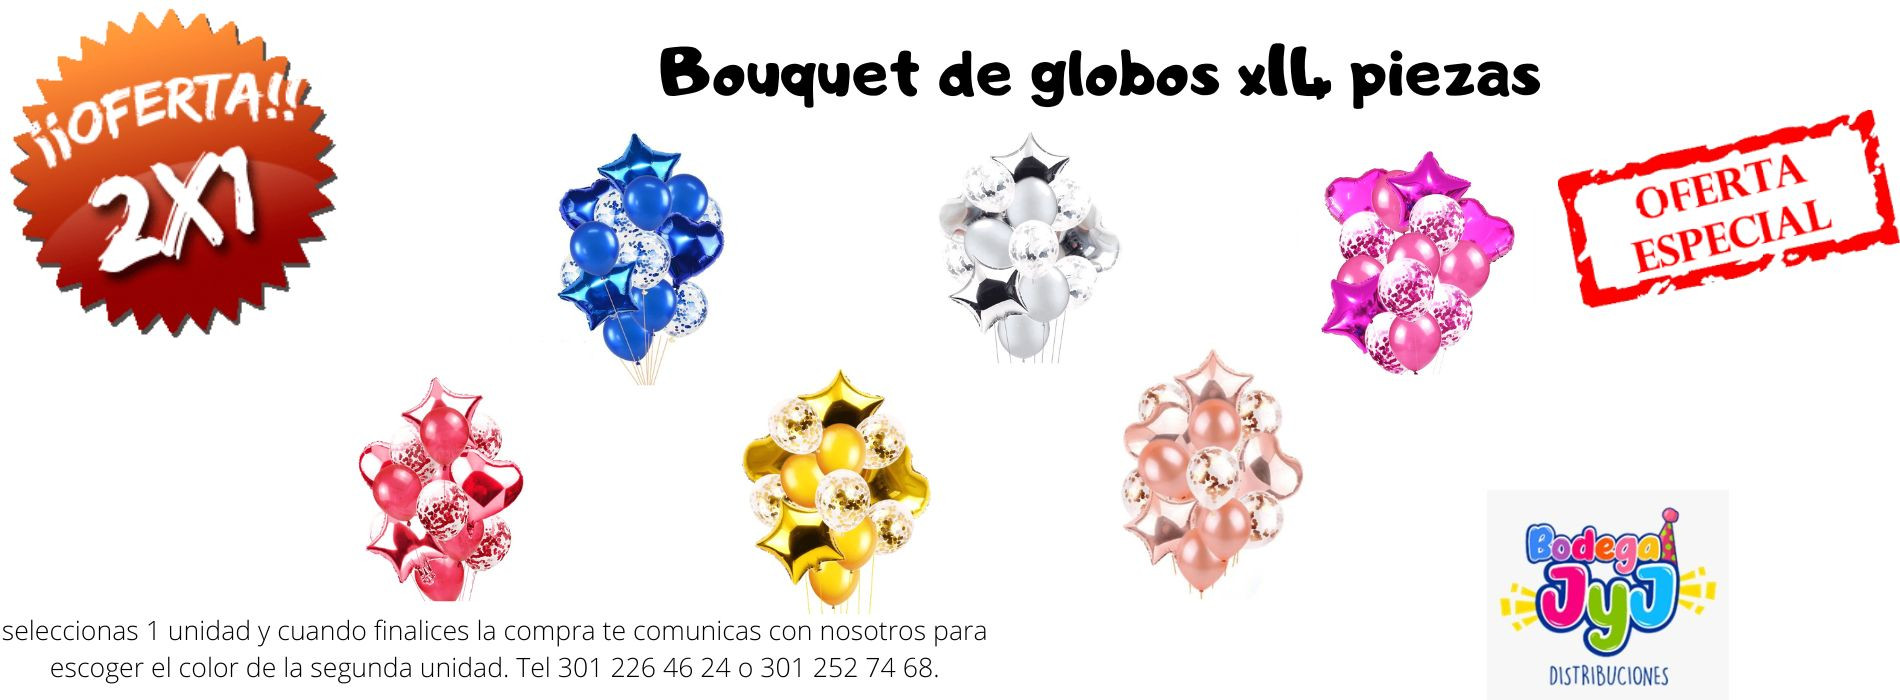 https://www.pinateriatufiesta.com/bouquet-de-globos-x14-piezas-